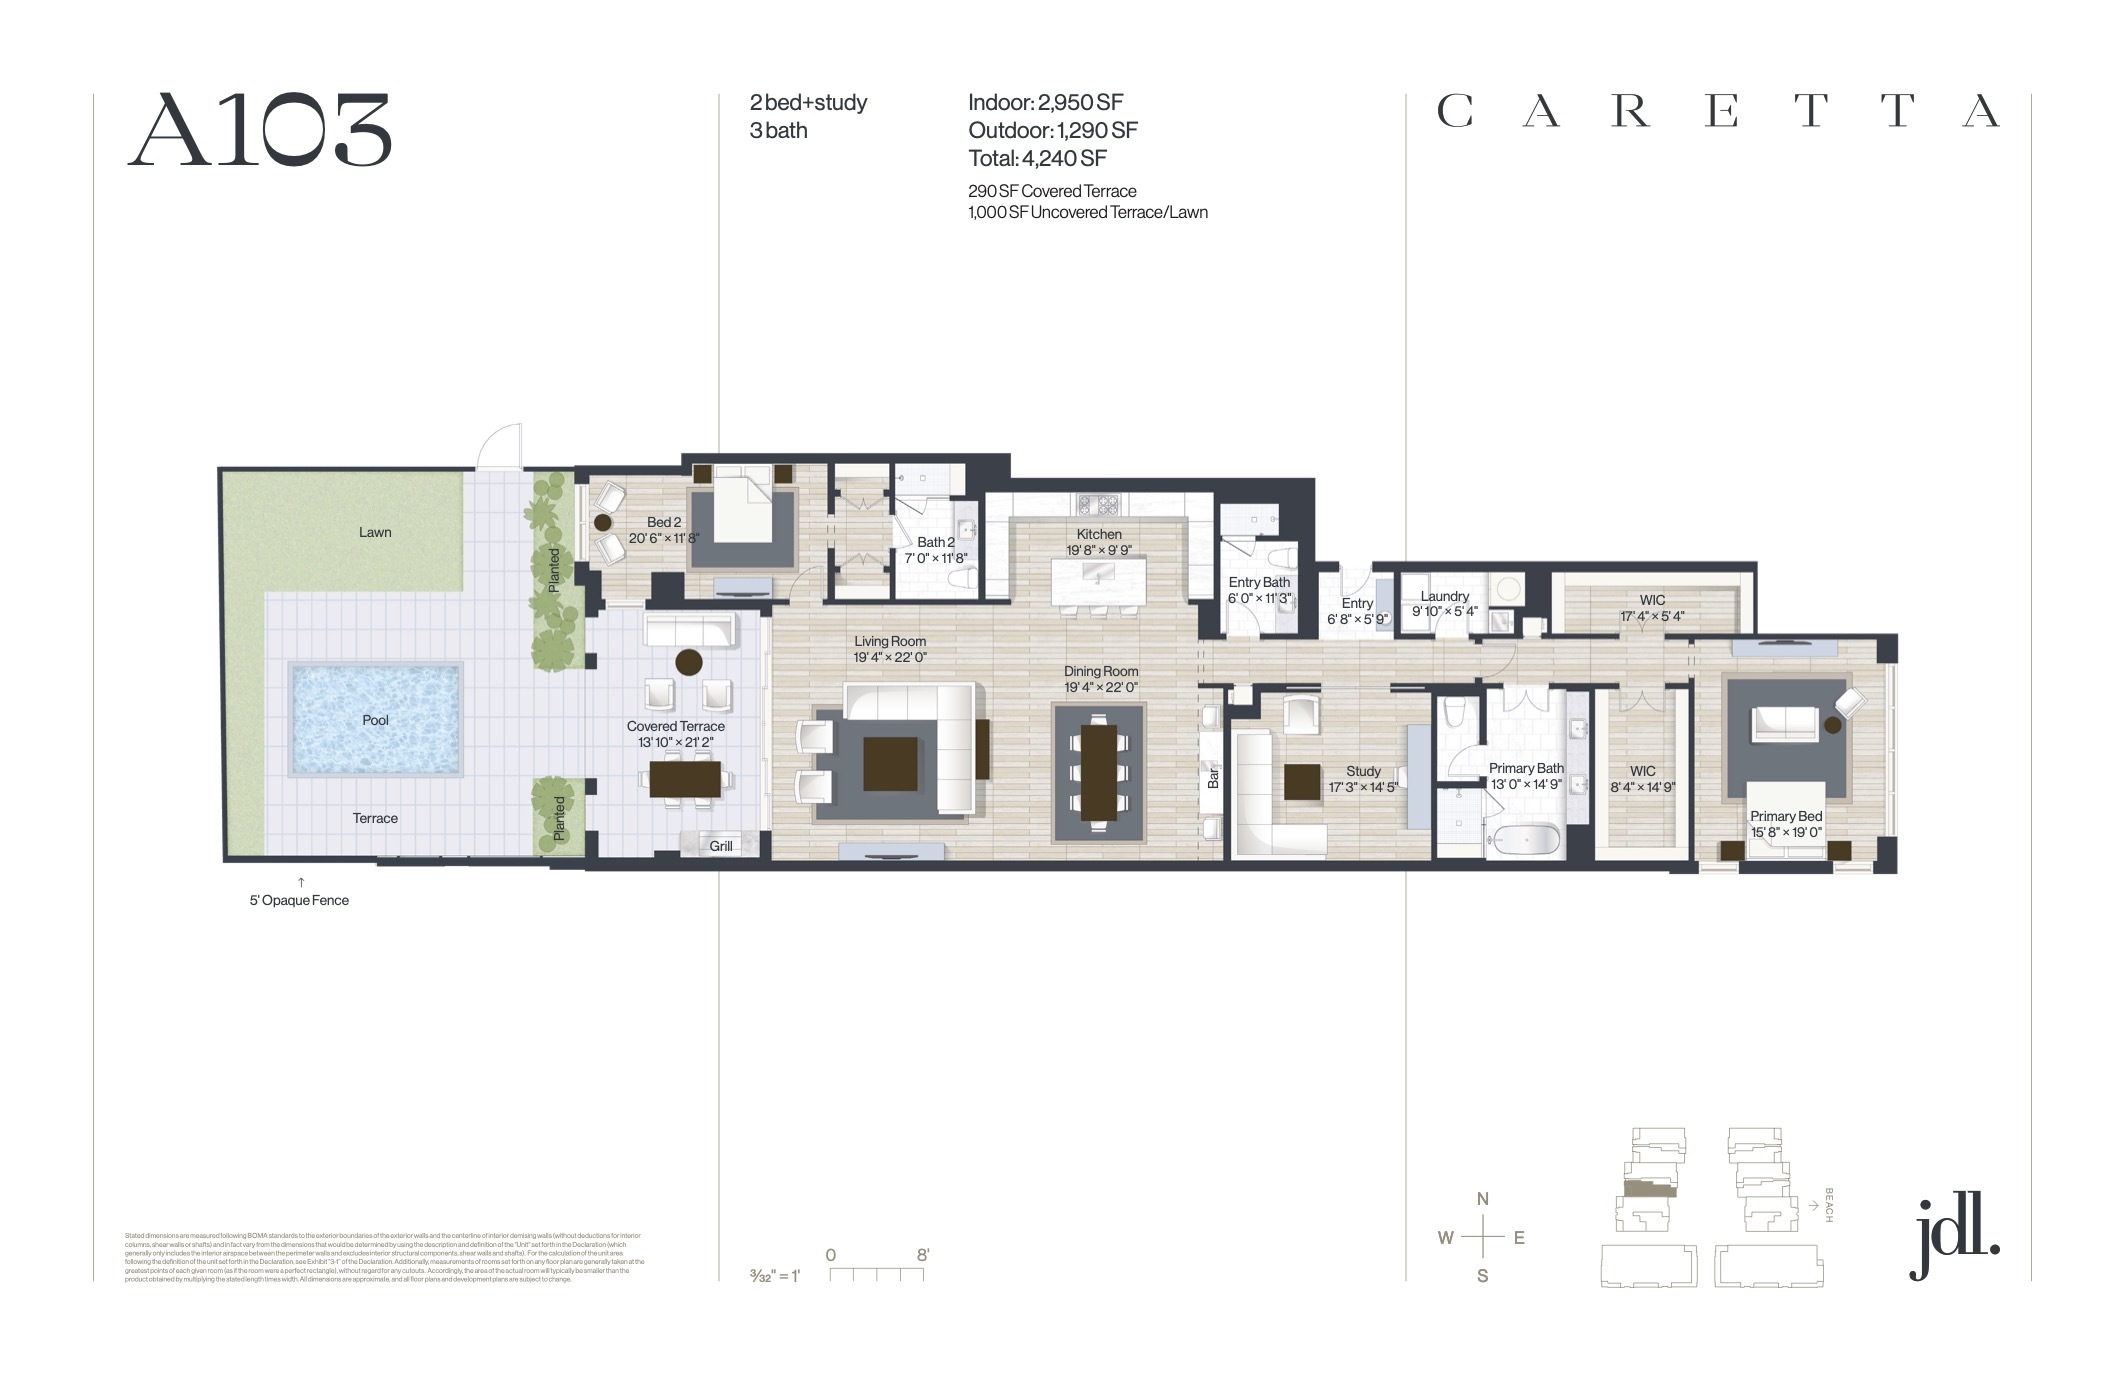 Floor Plan for Caretta Juno Beach Floorplans, A103